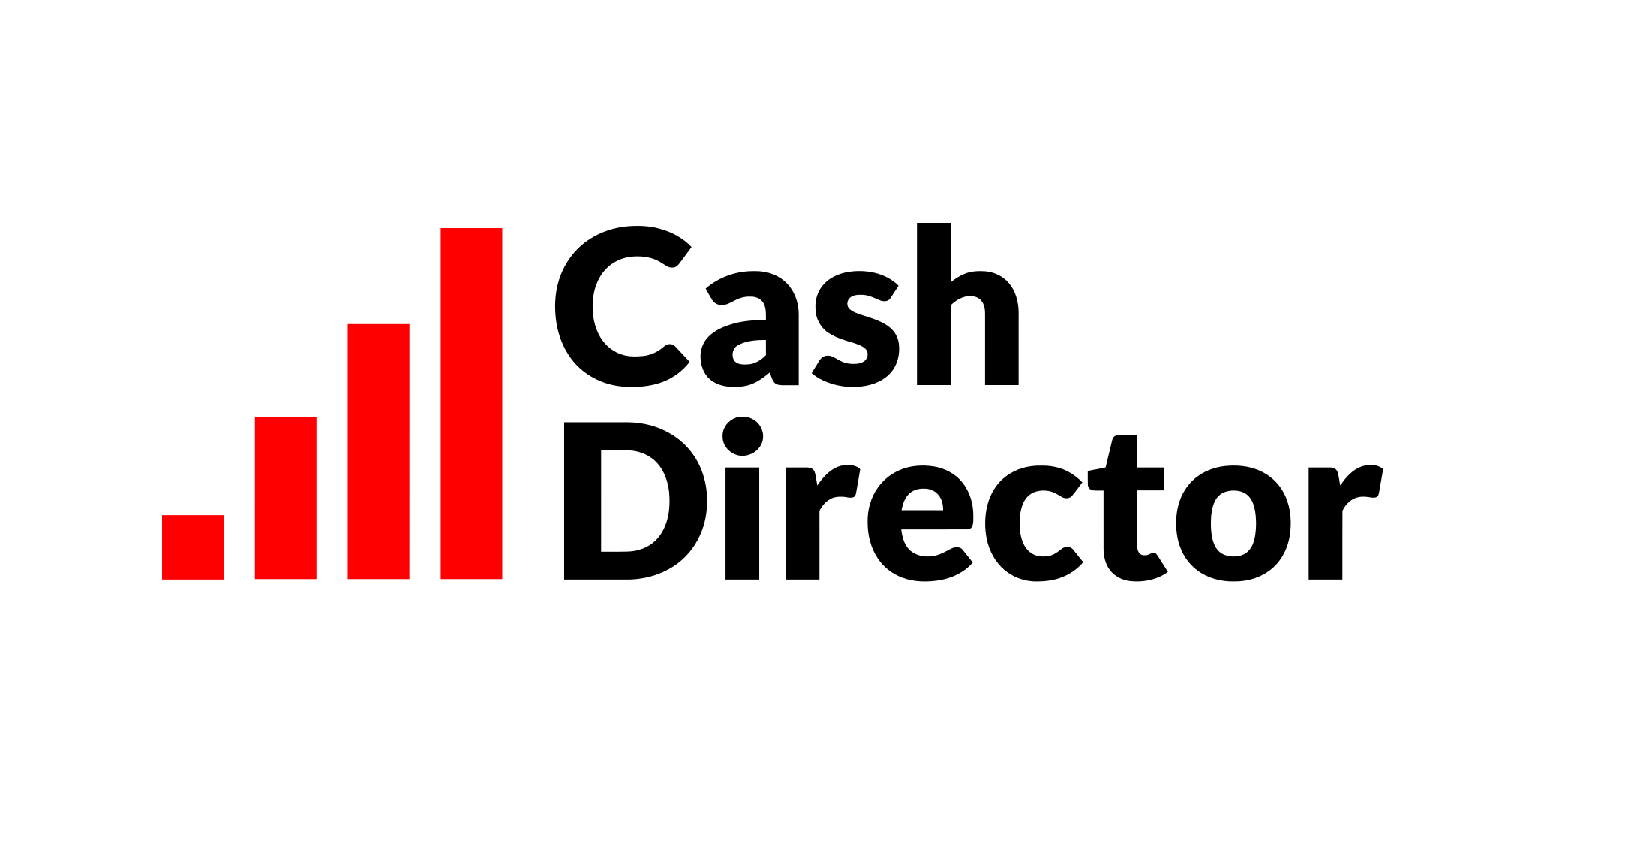 CashDirector